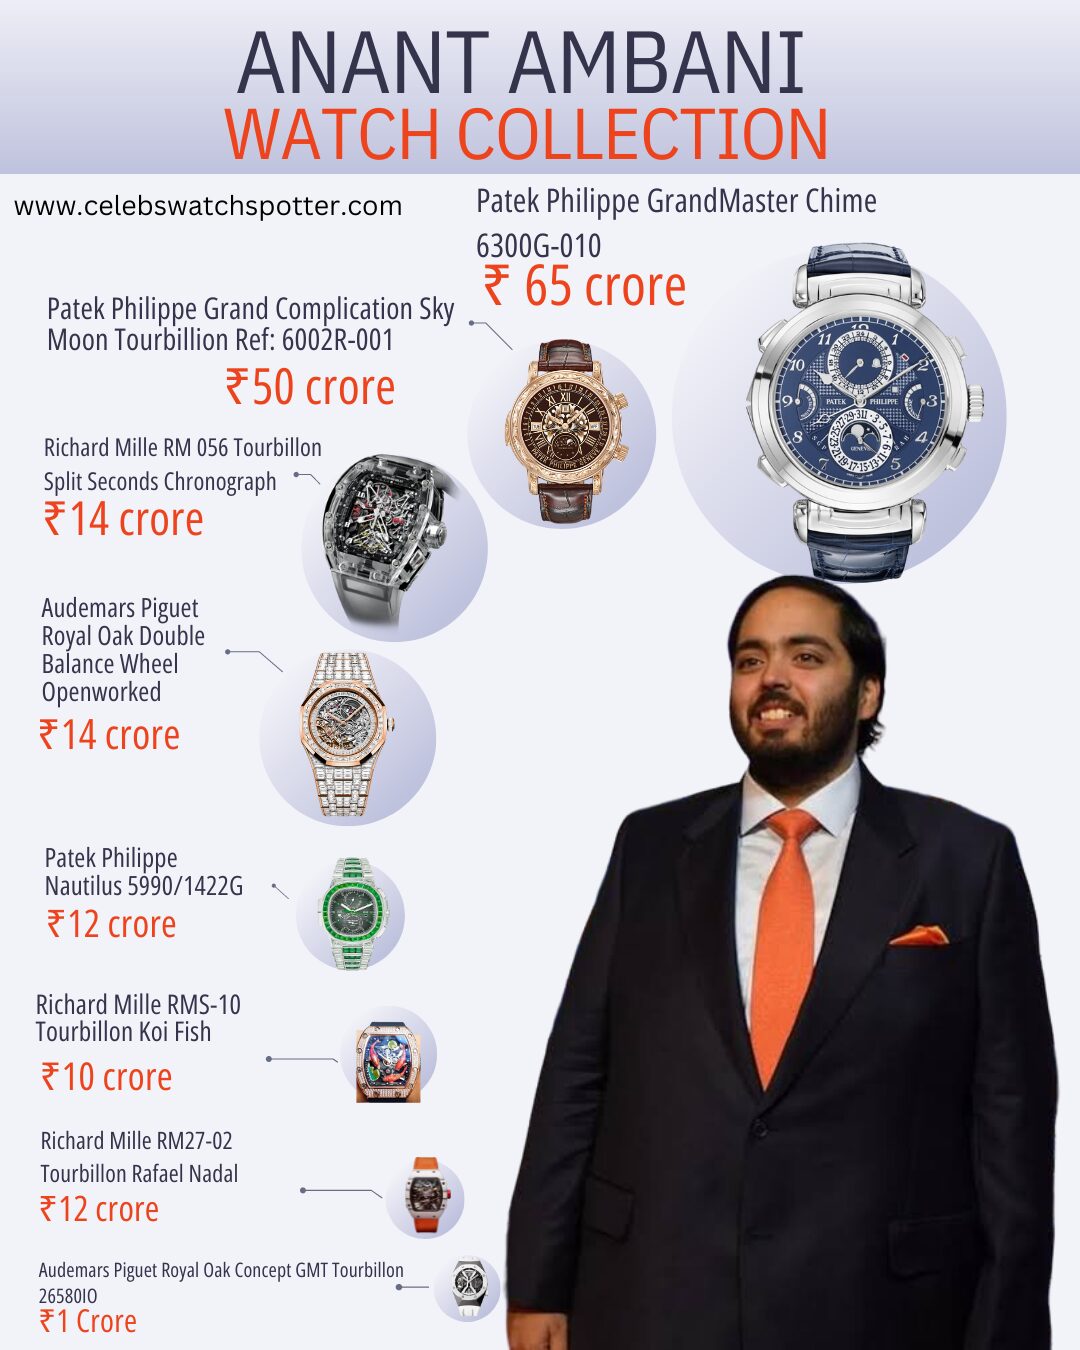 Anant Ambani Watch Collection Infographic